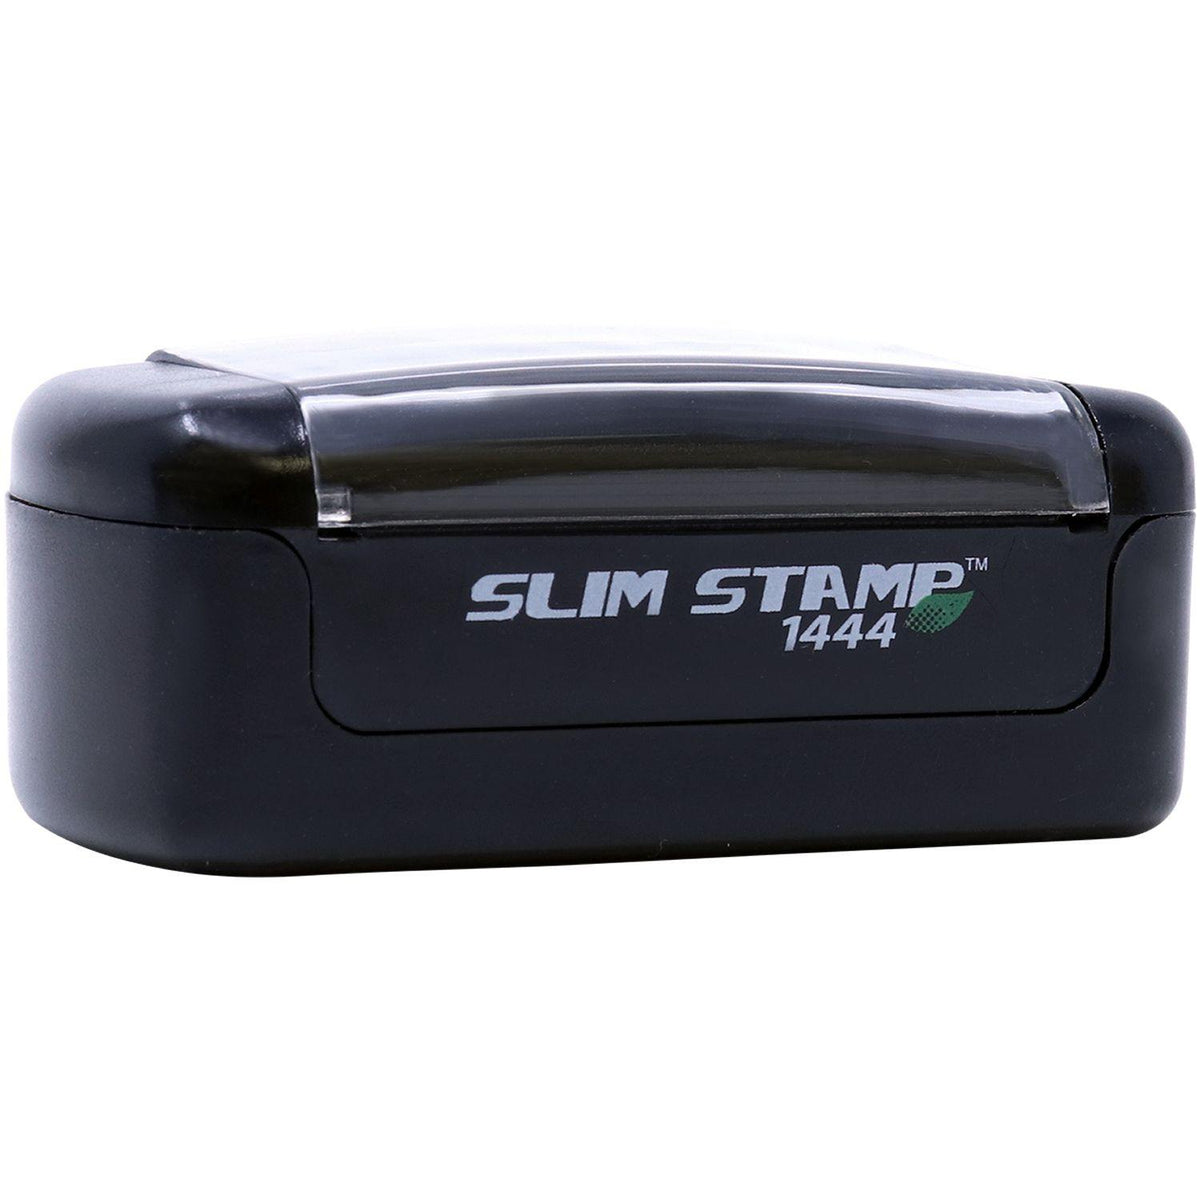 Slim Pre-Inked Avis De Receiption Stamp - Engineer Seal Stamps - Brand_Slim, Impression Size_Small, Stamp Type_Pre-Inked Stamp, Type of Use_Office